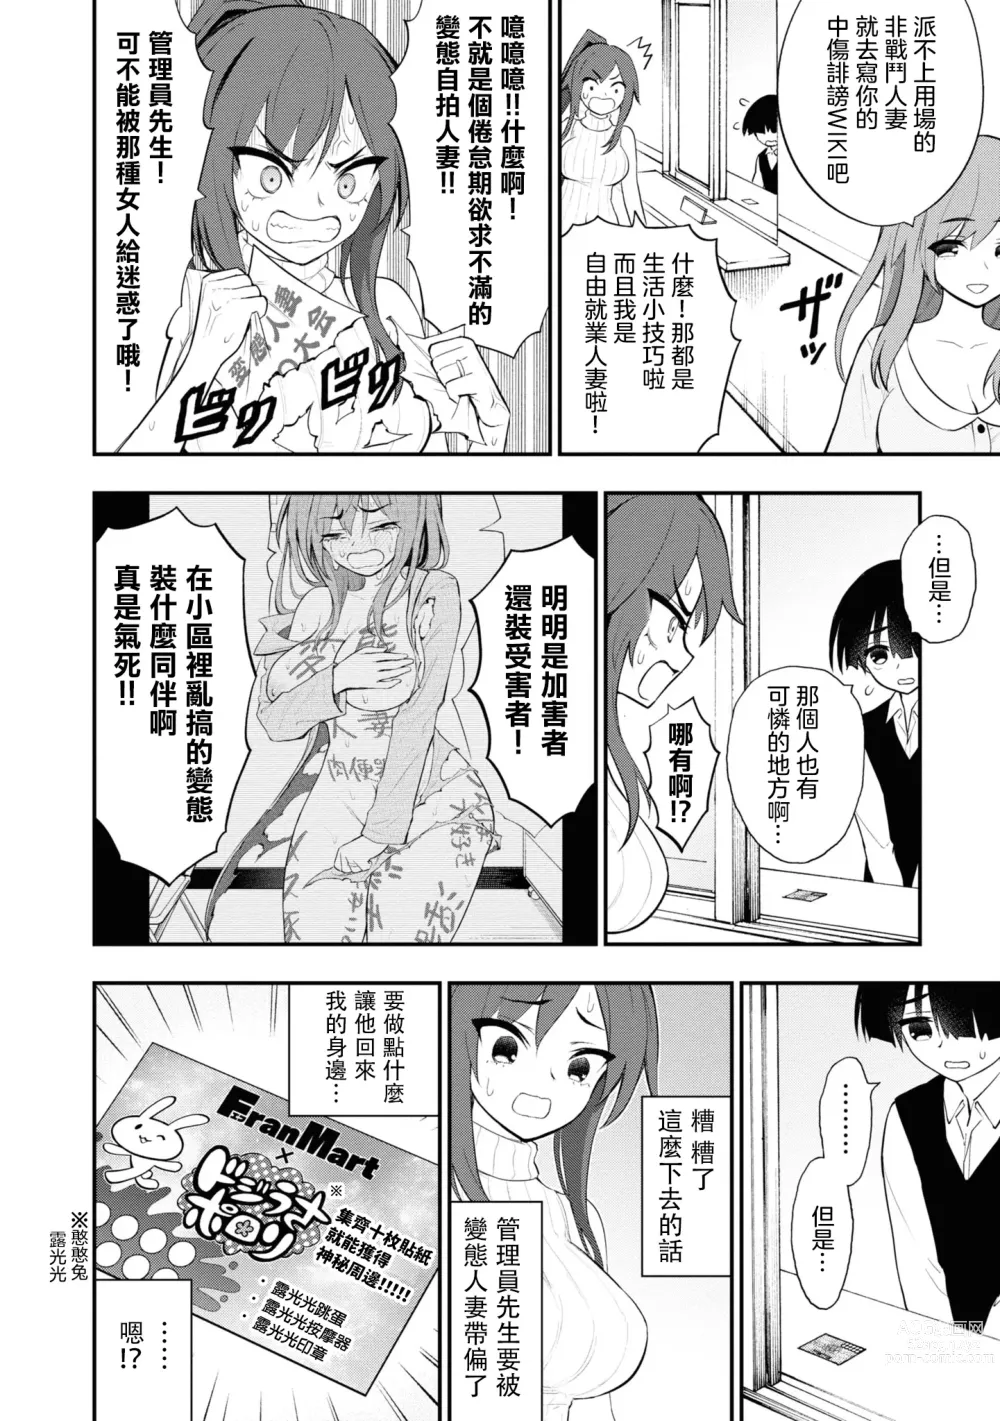 Page 9 of manga 淫獄小區 VOL.4